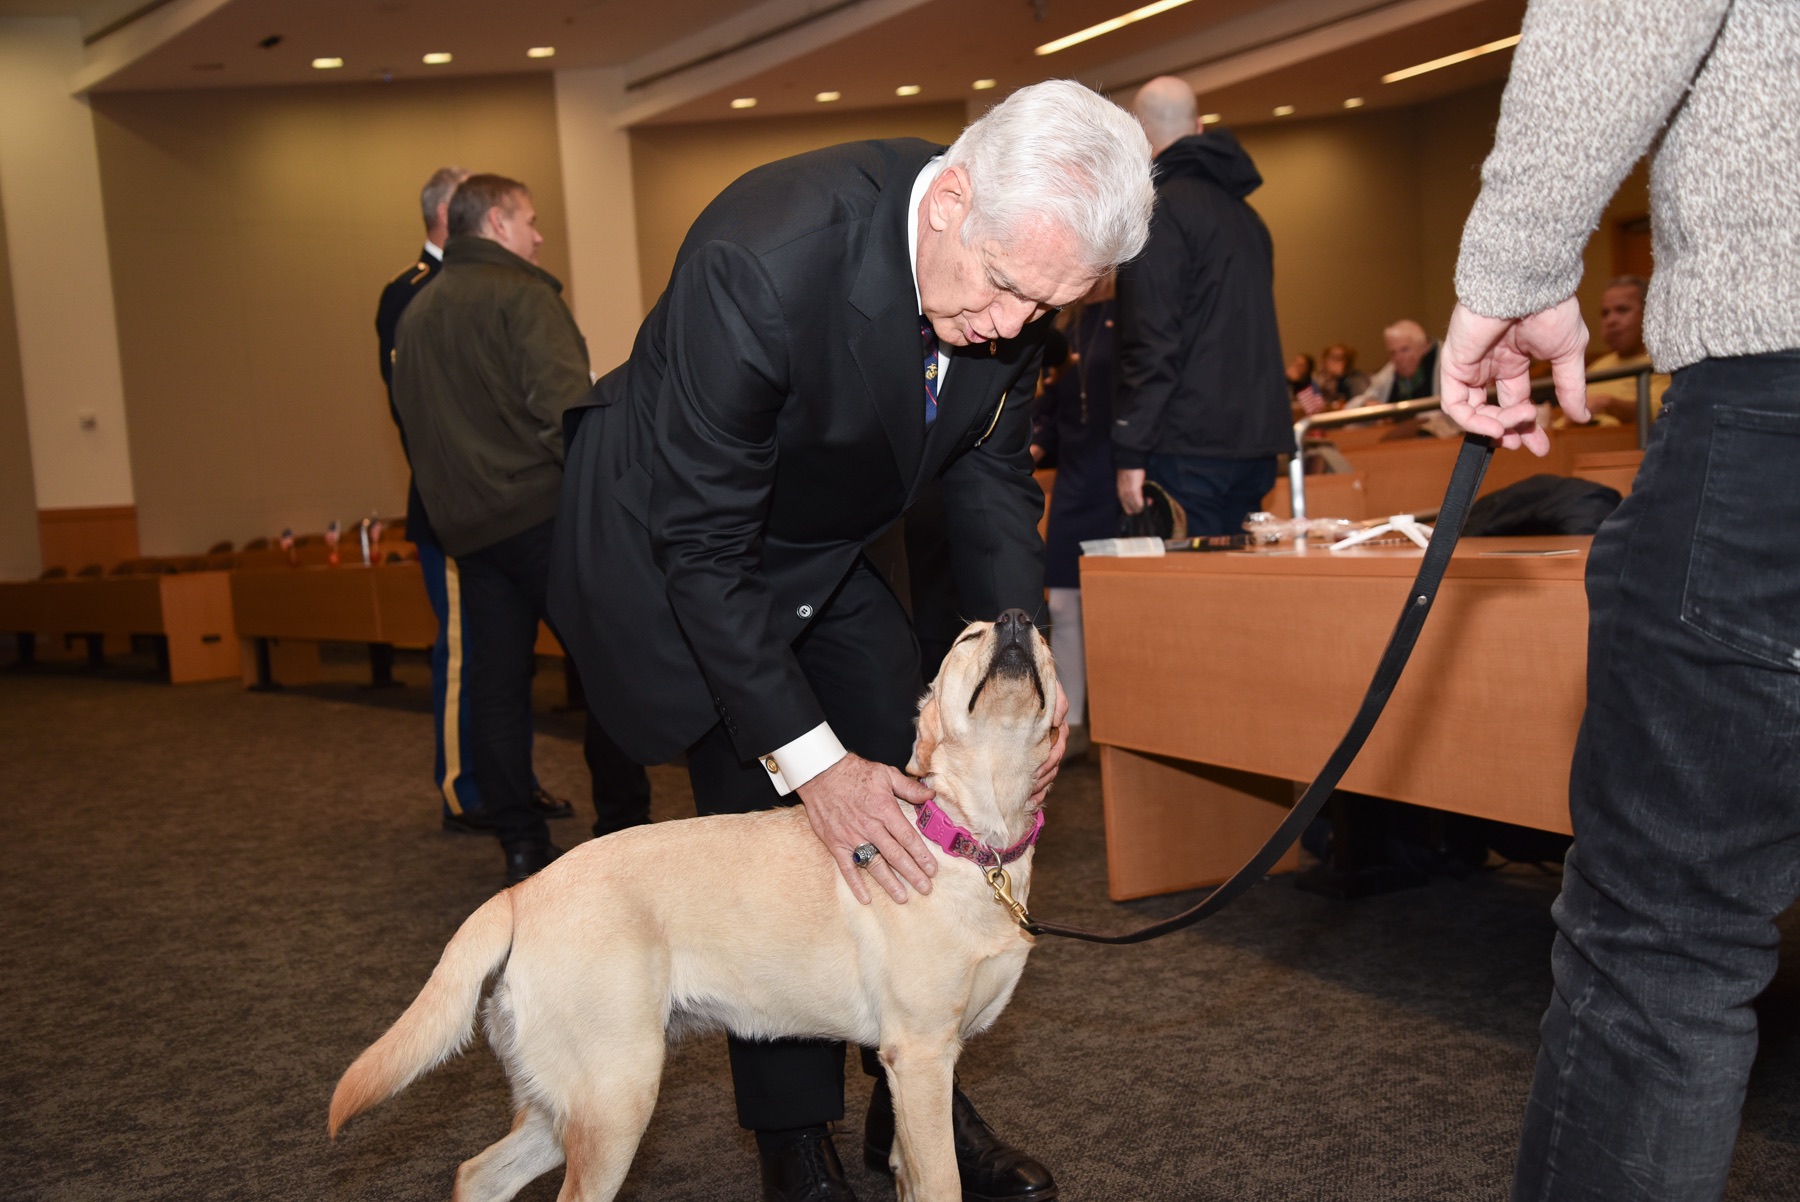 Edward Turzanski, Chairman, Divisional Board of Trustees, Jefferson Health – Northeast, pets Maggie the dog.